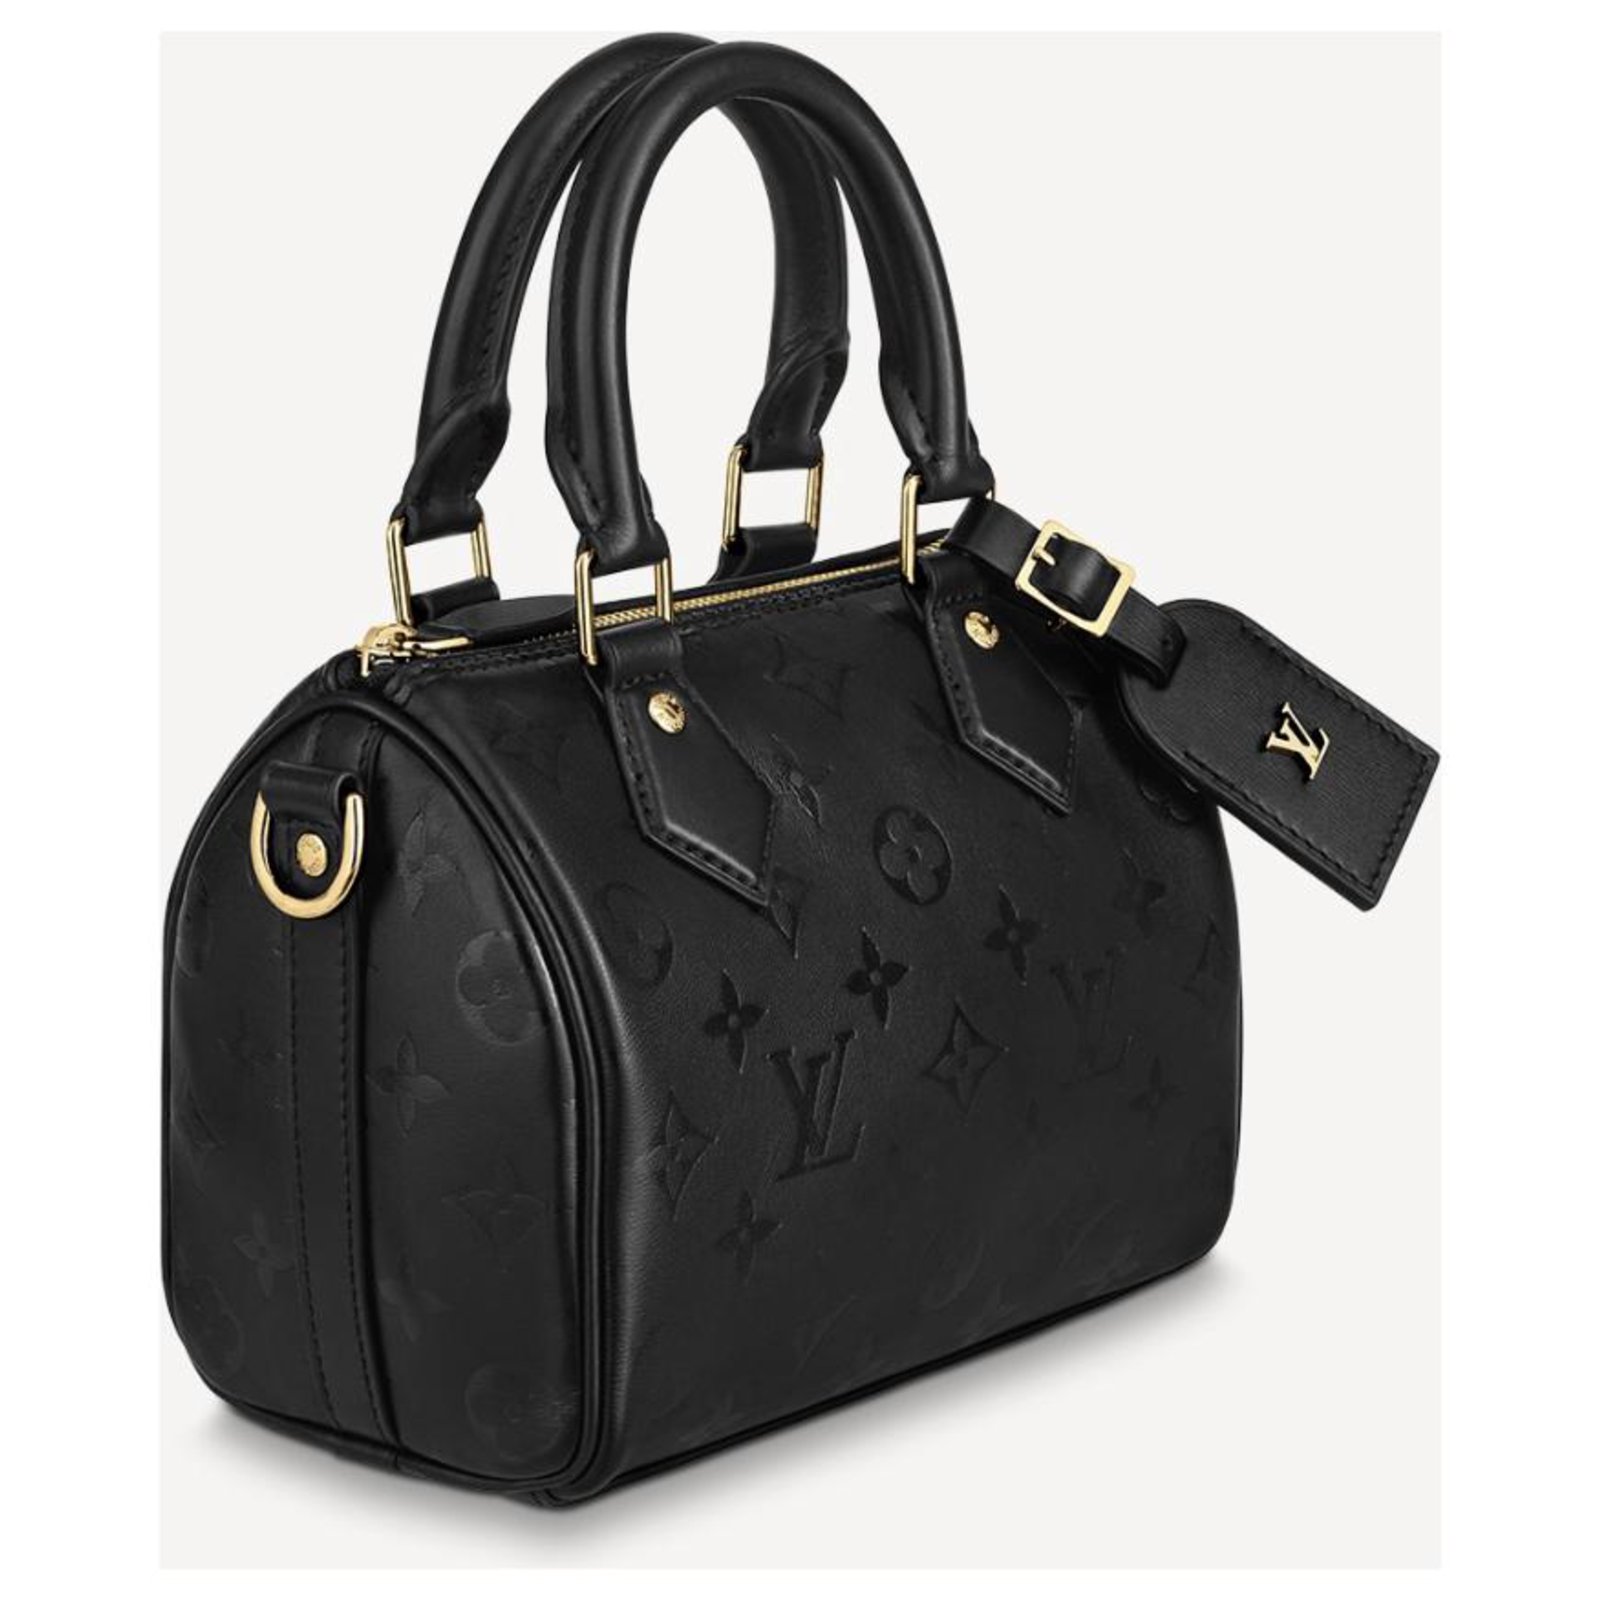 Louis Vuitton Speedy Bb Handbag